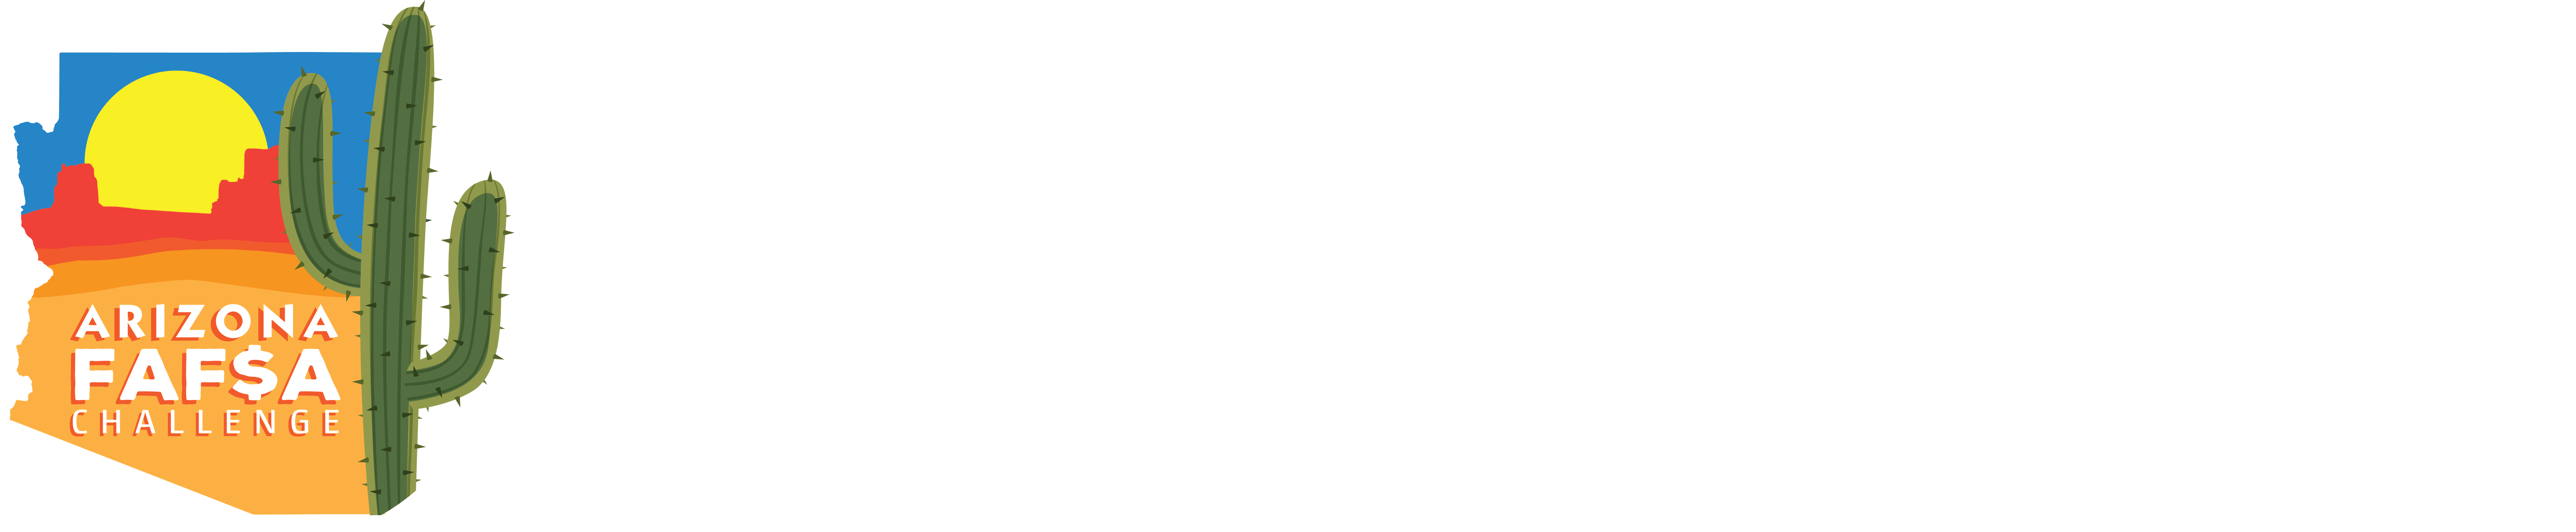 FAFSA Logo - Arizona FAFSA Challenge